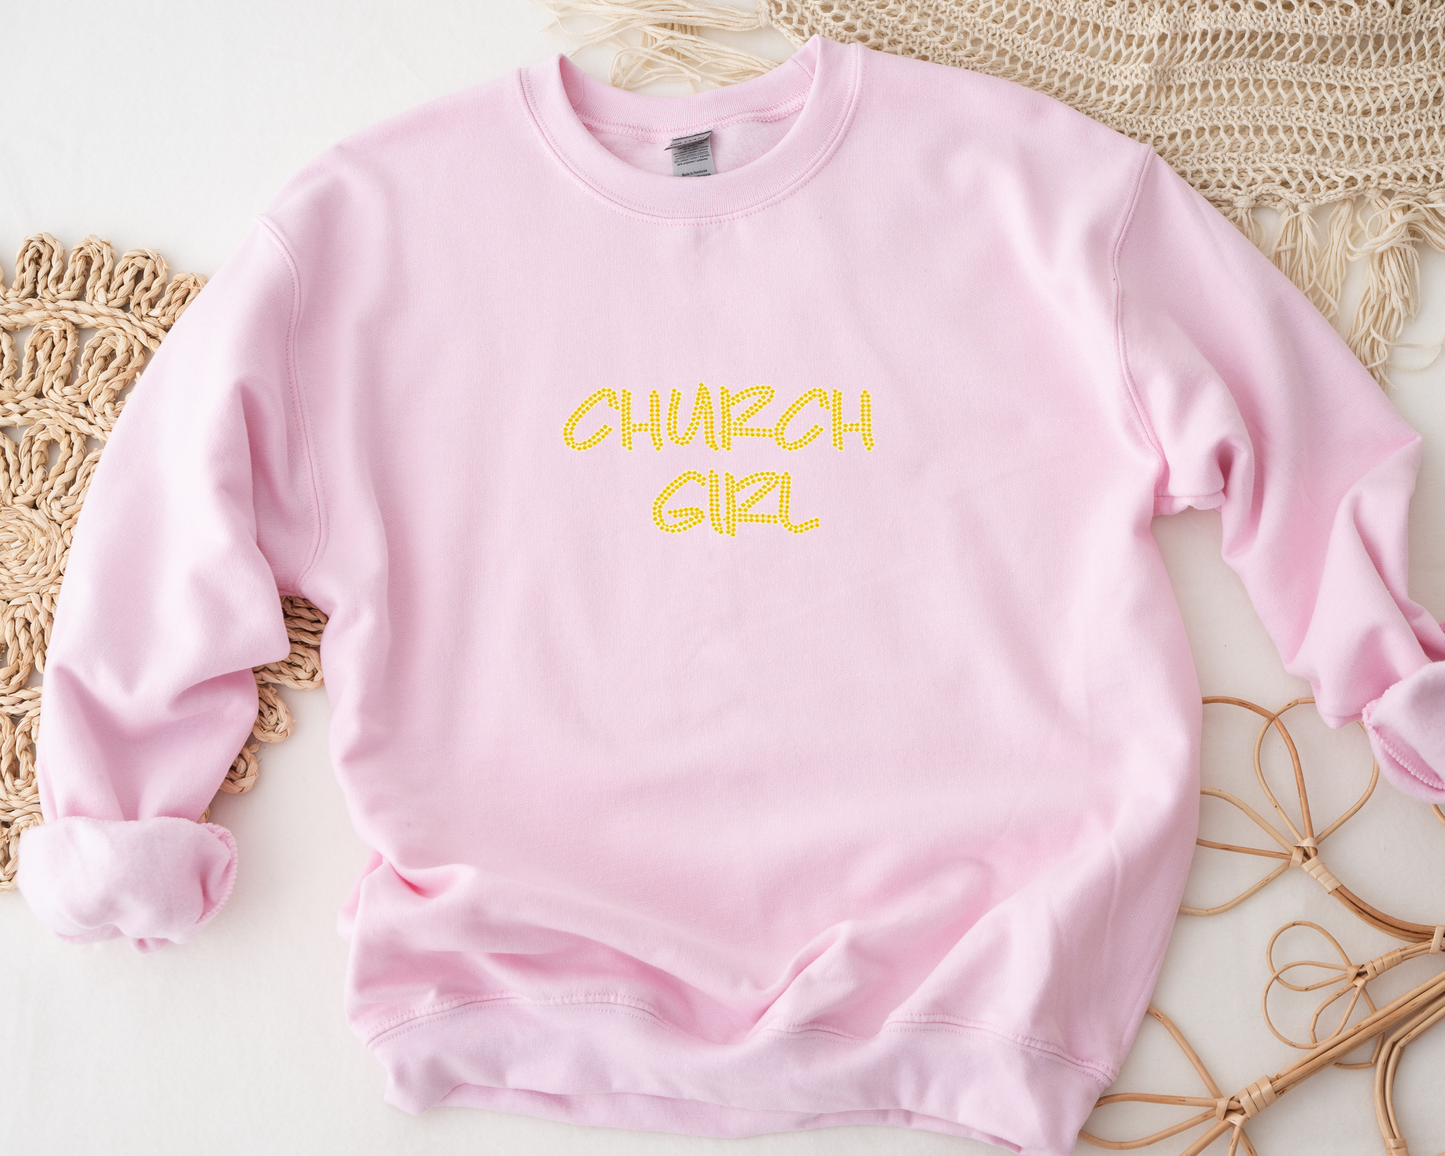 Church Girl hoodies/sweatshirts